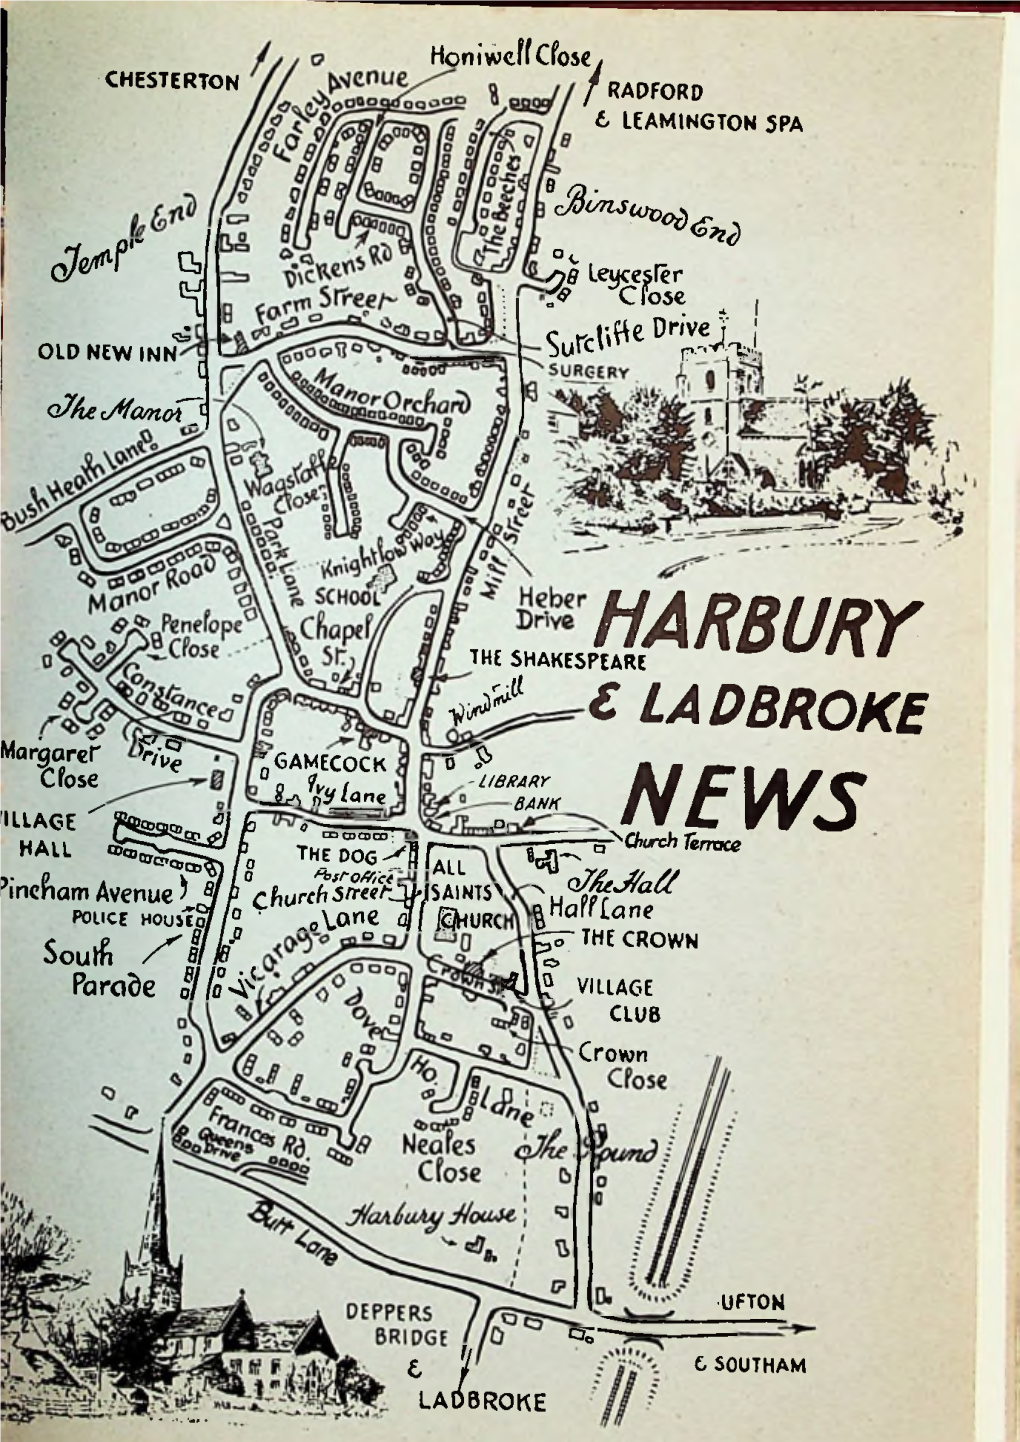 Harbury Liberal Assoc.) HARBURY LADIES NETBALL CLUB